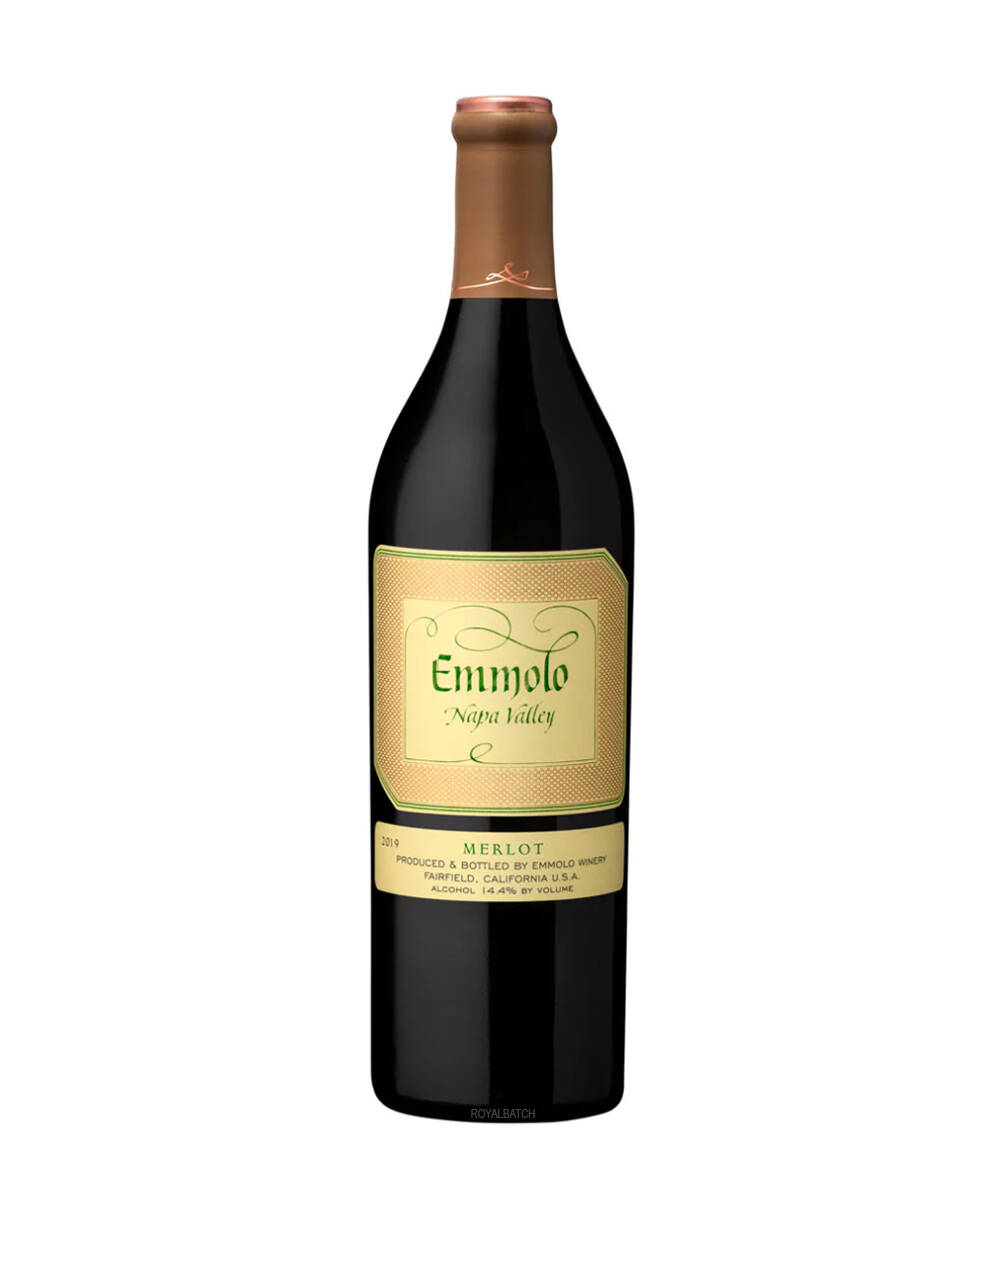 Emmolo Merlot Napa Valley Wine 2018